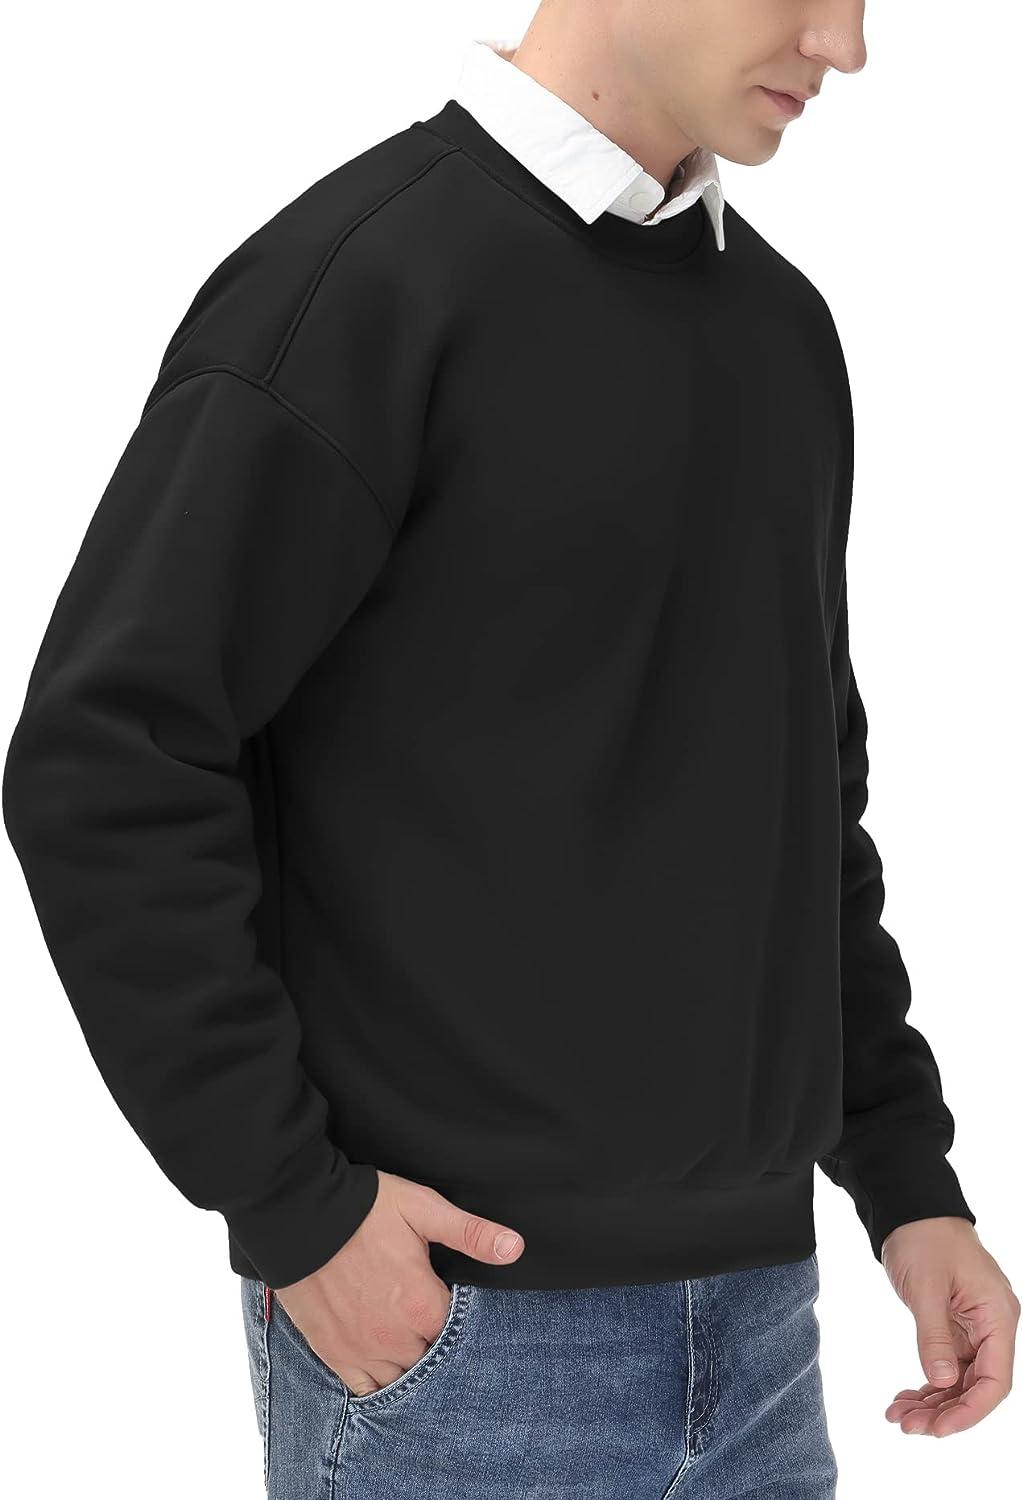 THE GYM PEOPLE Men's Fleece Crewneck Sweatshirt Thick Loose fit Soft Basic  Pullover Sweatshirt Black Large